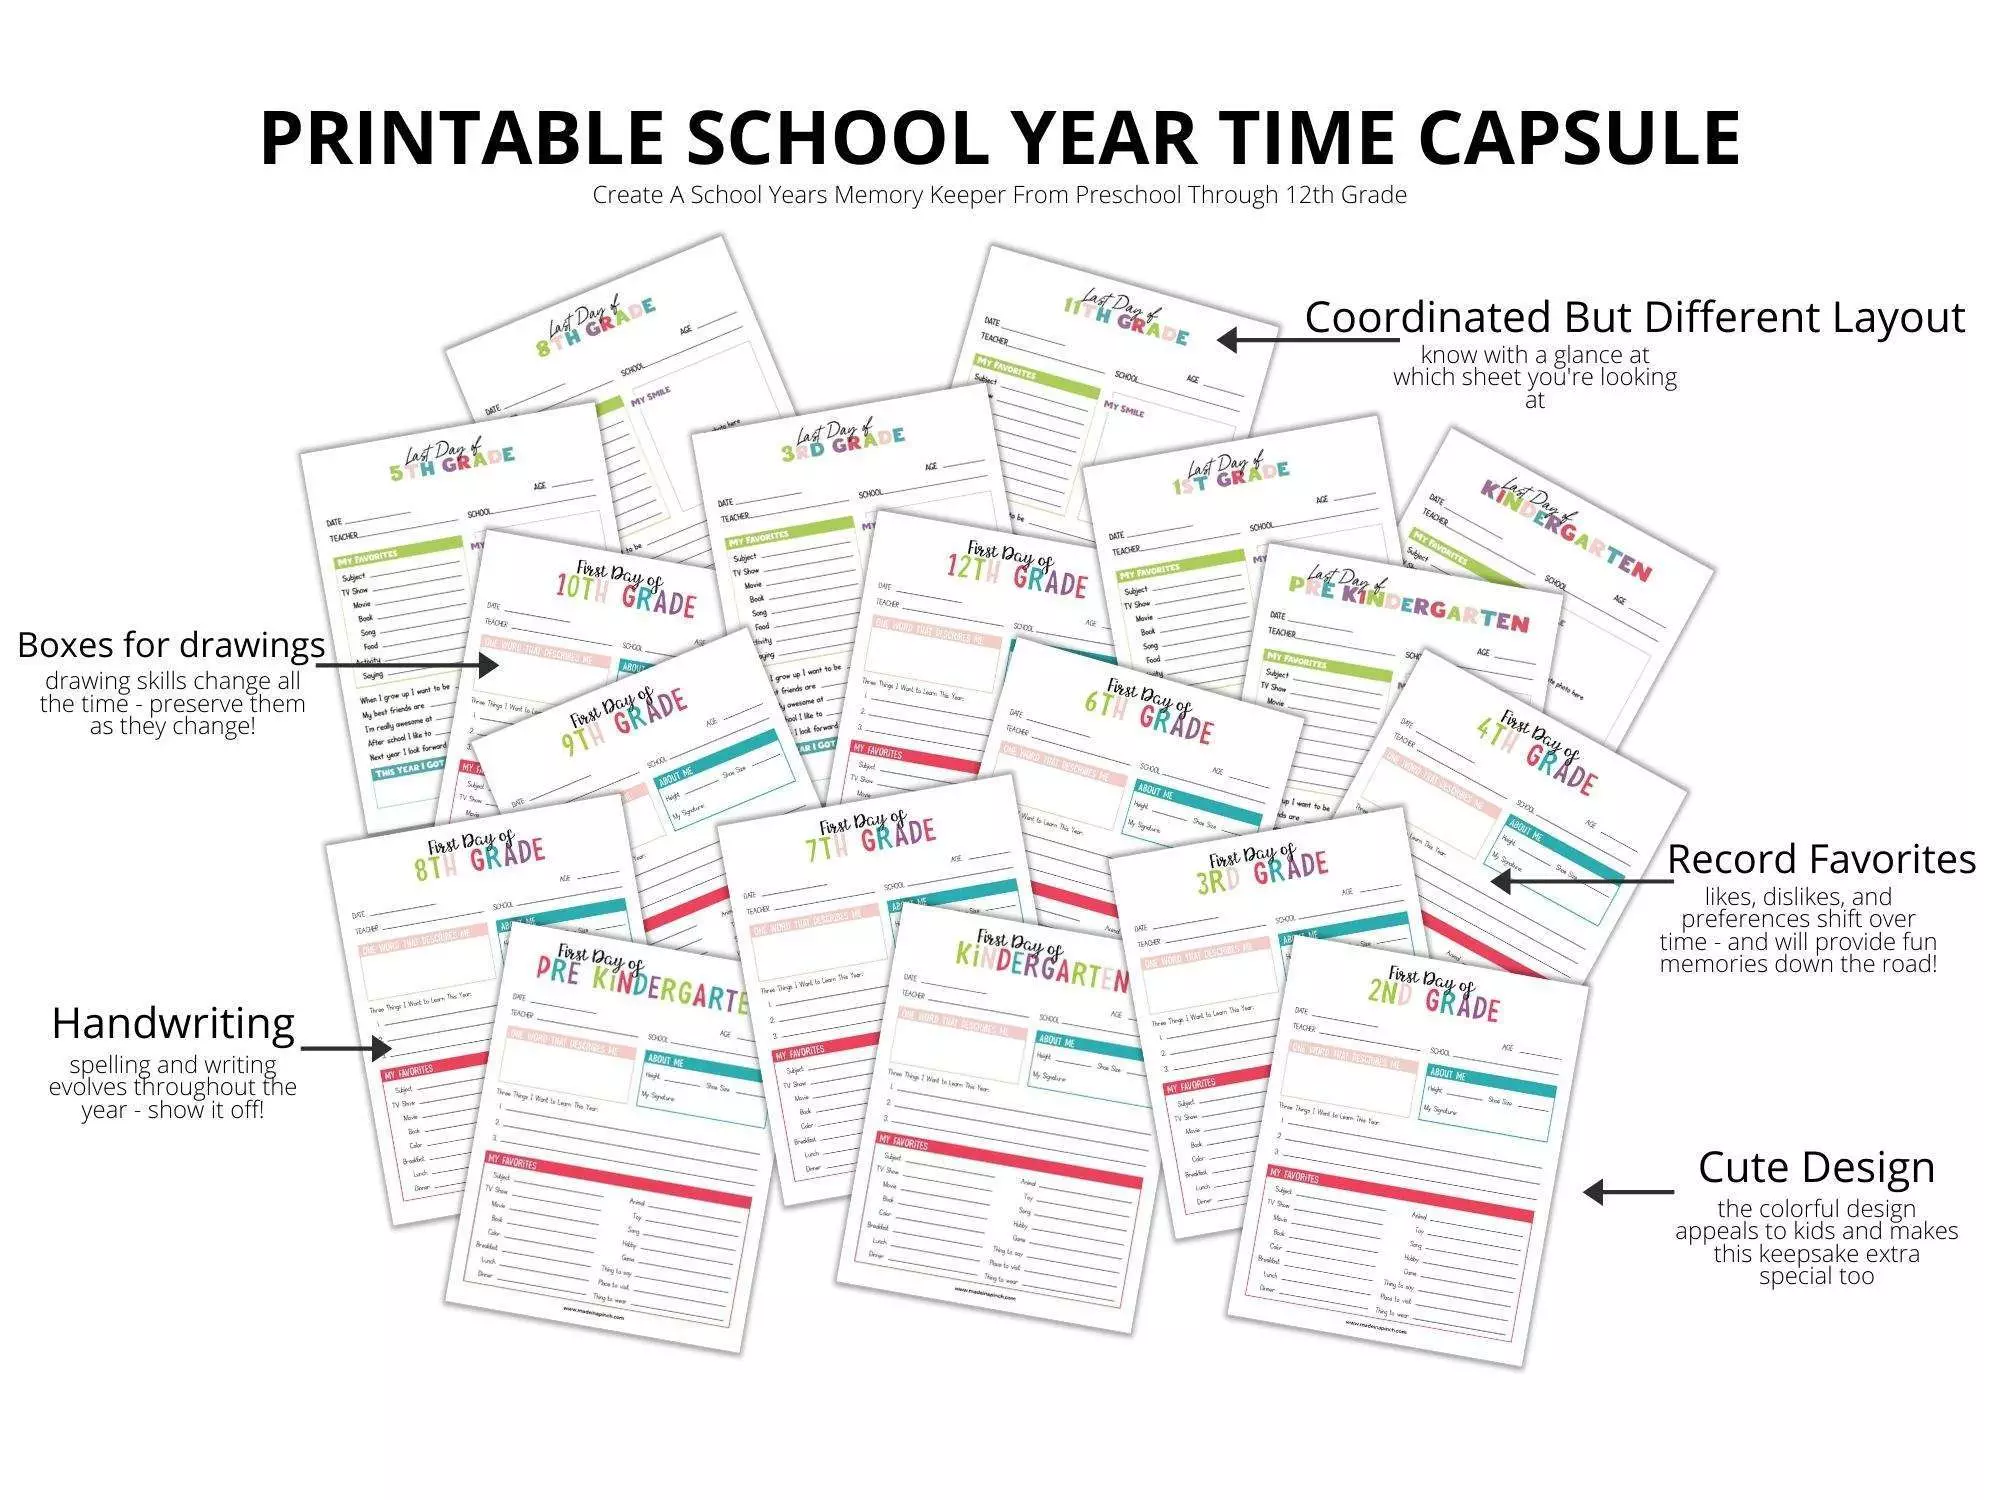 Full school year time capsule mockup